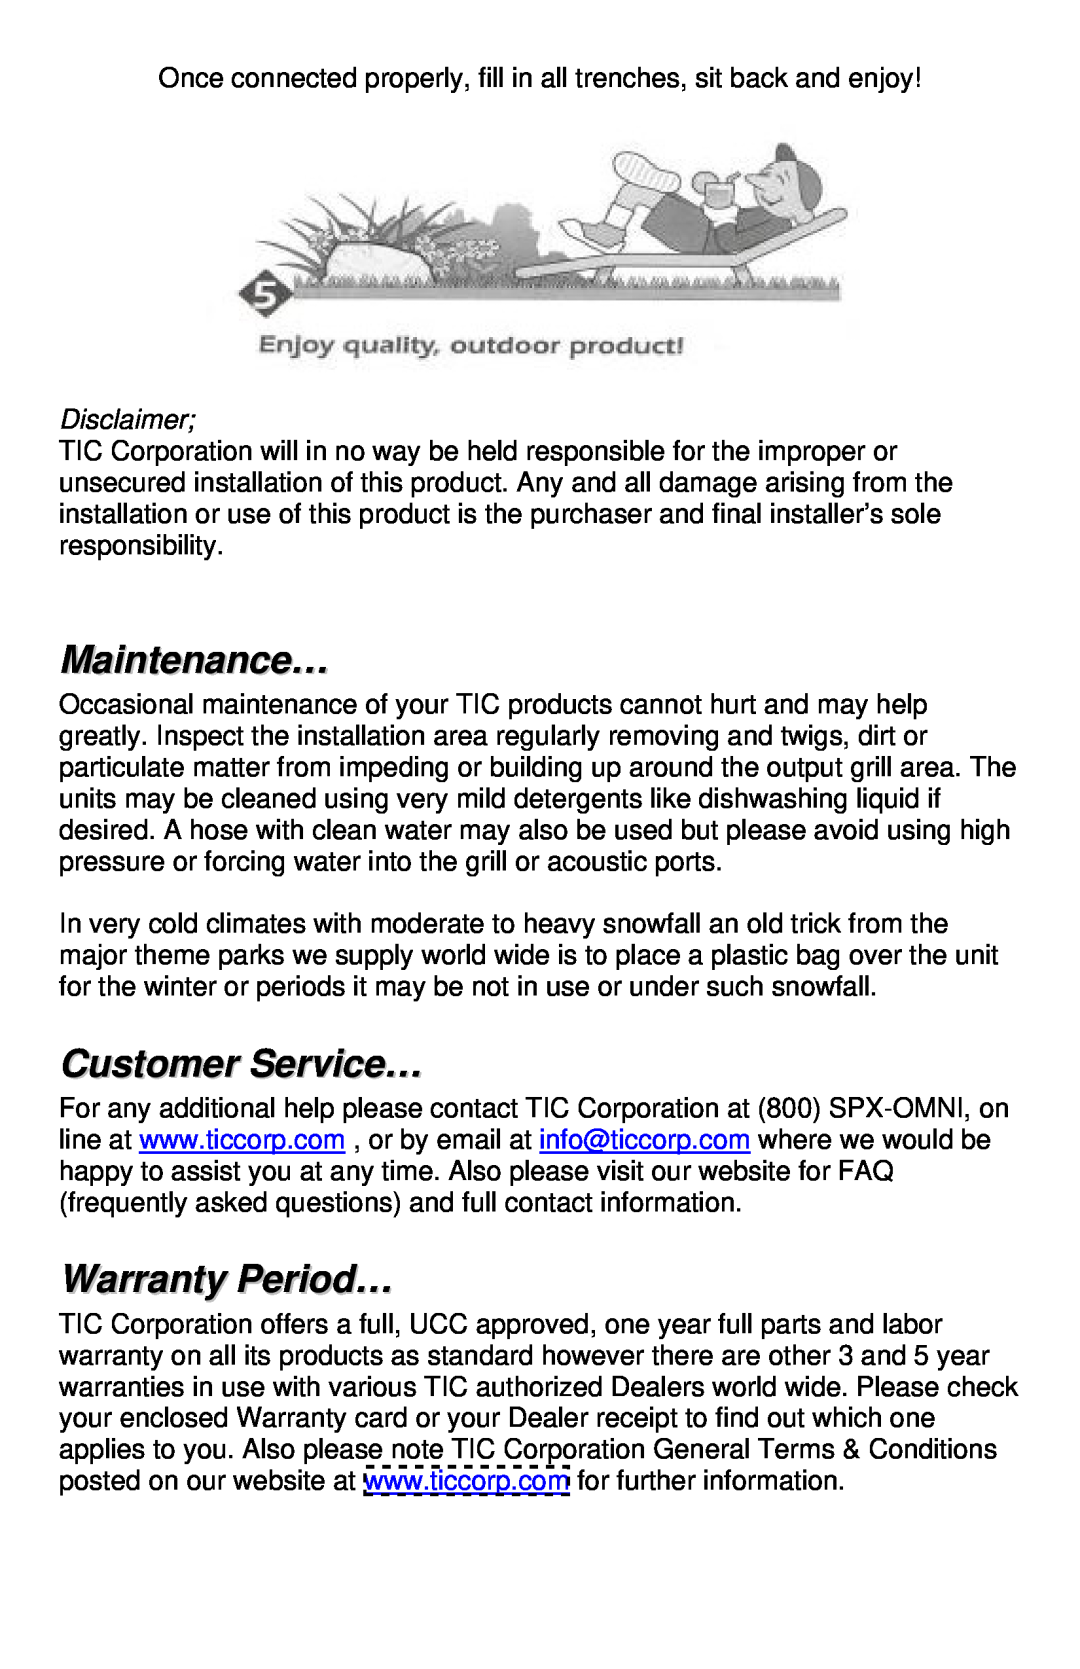 TIC TFS12 manual Maintenance…, Customer Service…, Warranty Period…, Disclaimer 